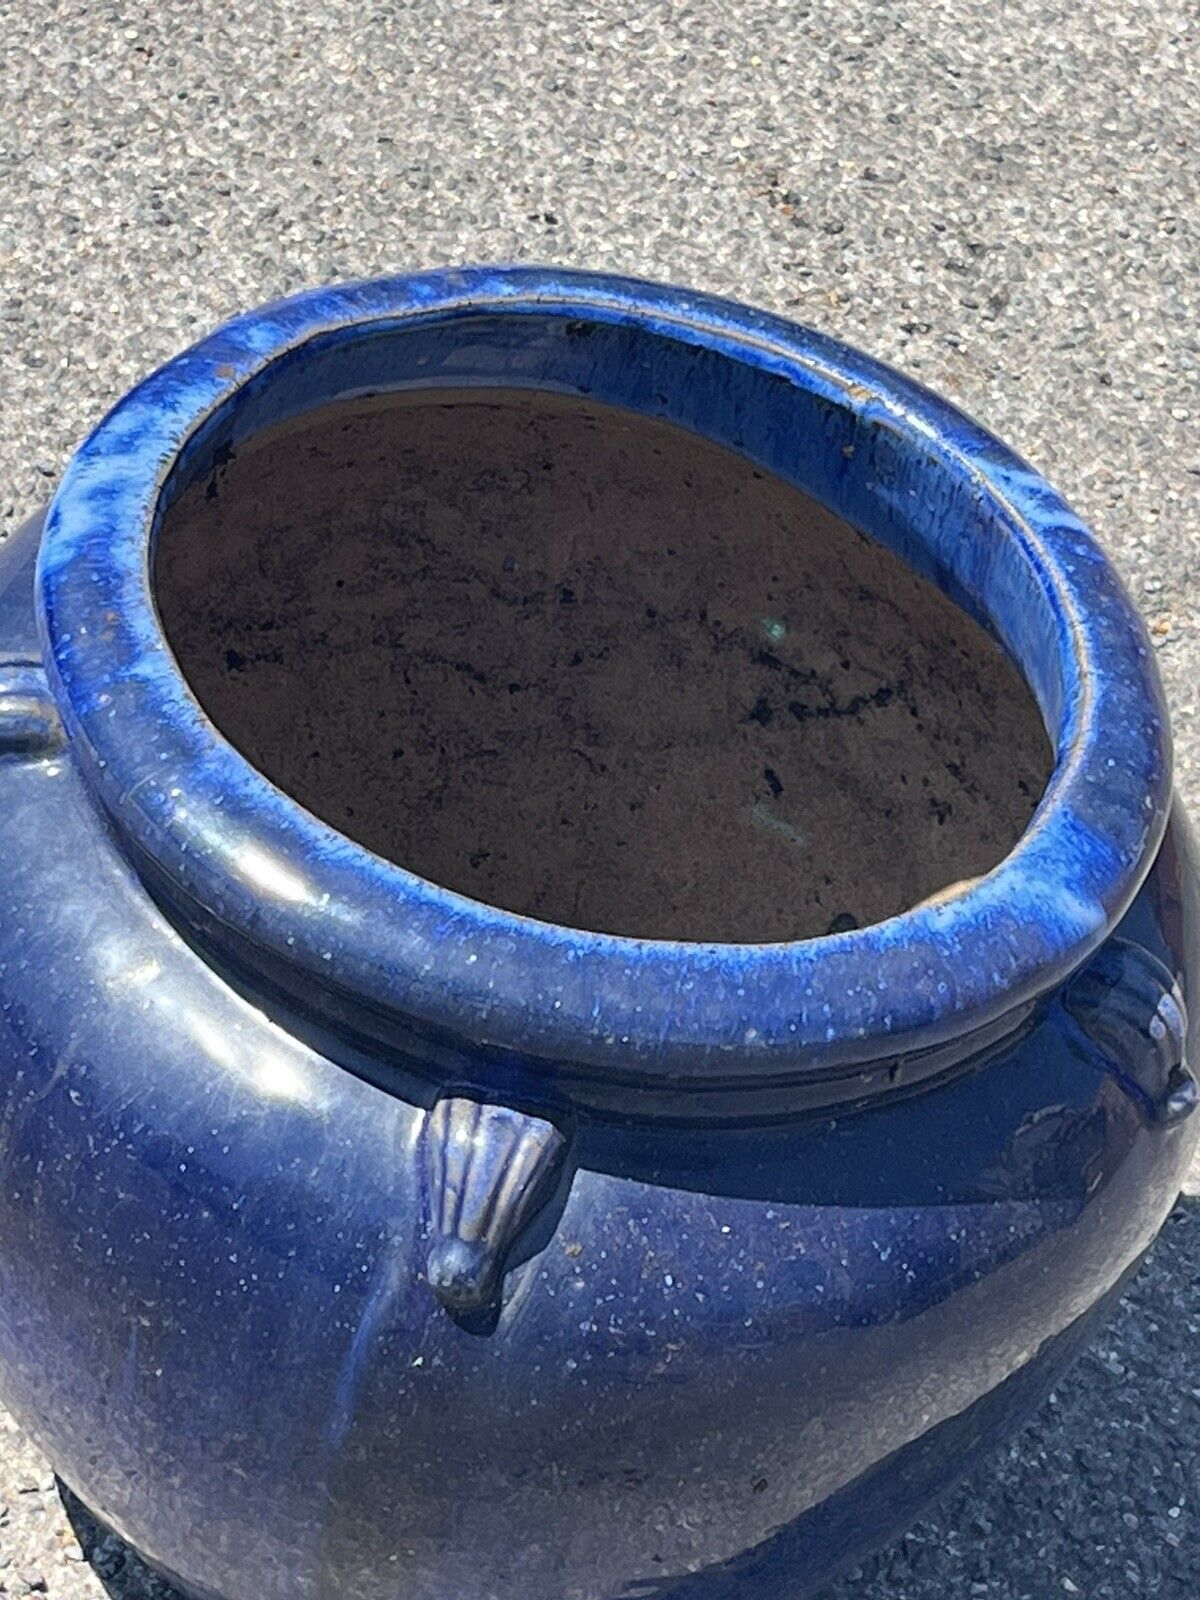 Large Blue Ceramic Plant Pot. Very Good Quality.